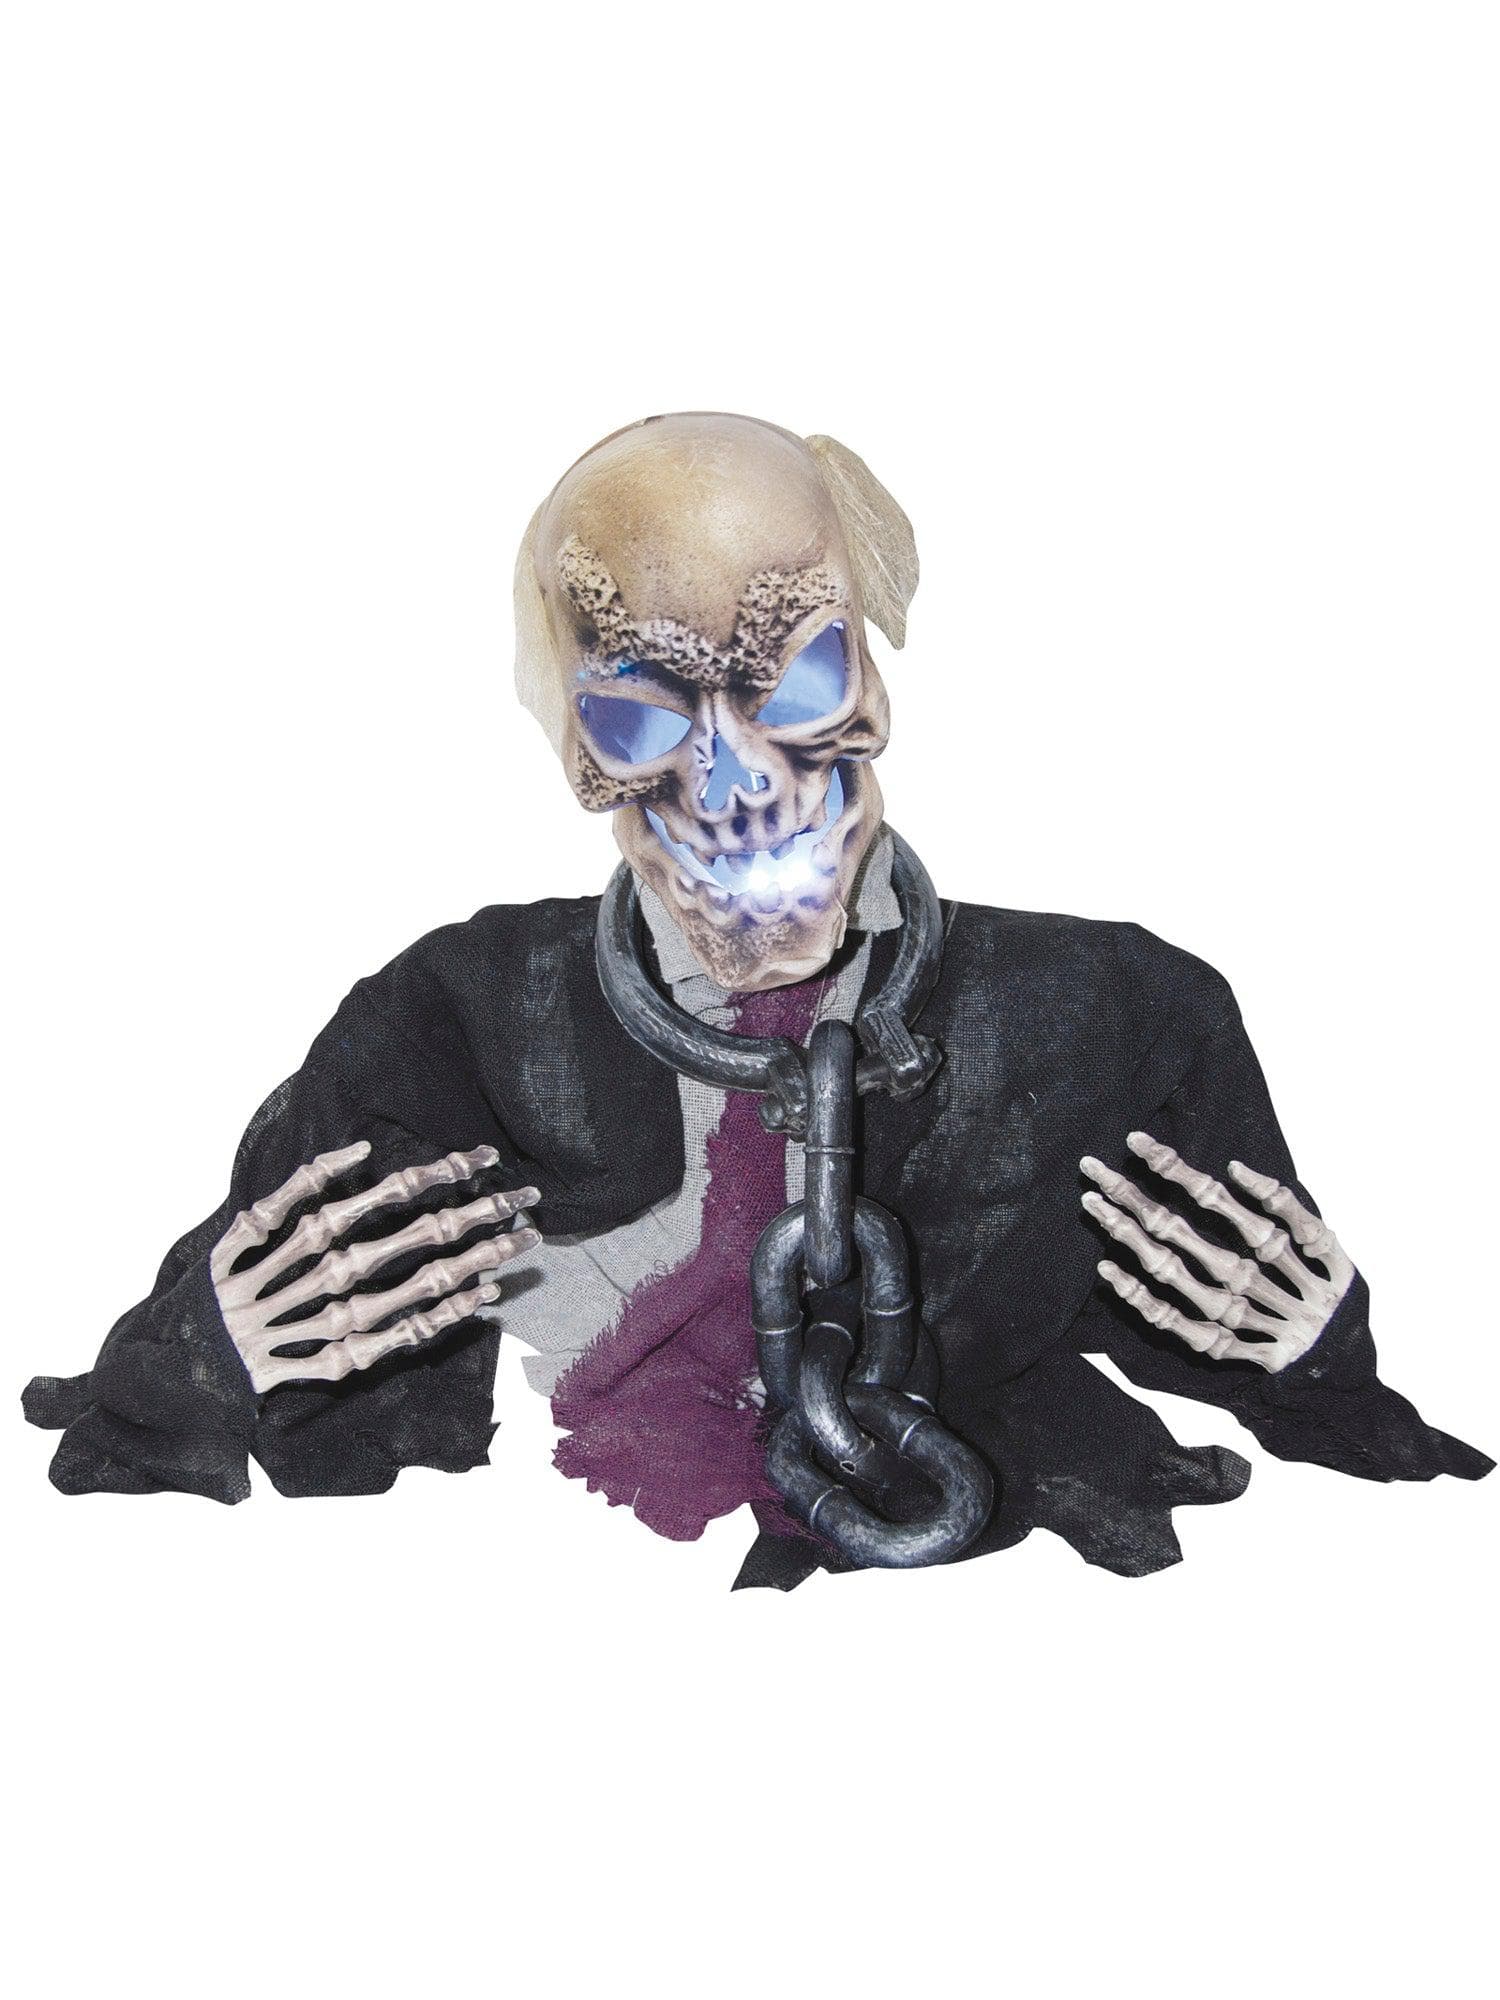 4 Foot Skeleton Groundbreaker Light Up Animated Prop - costumes.com